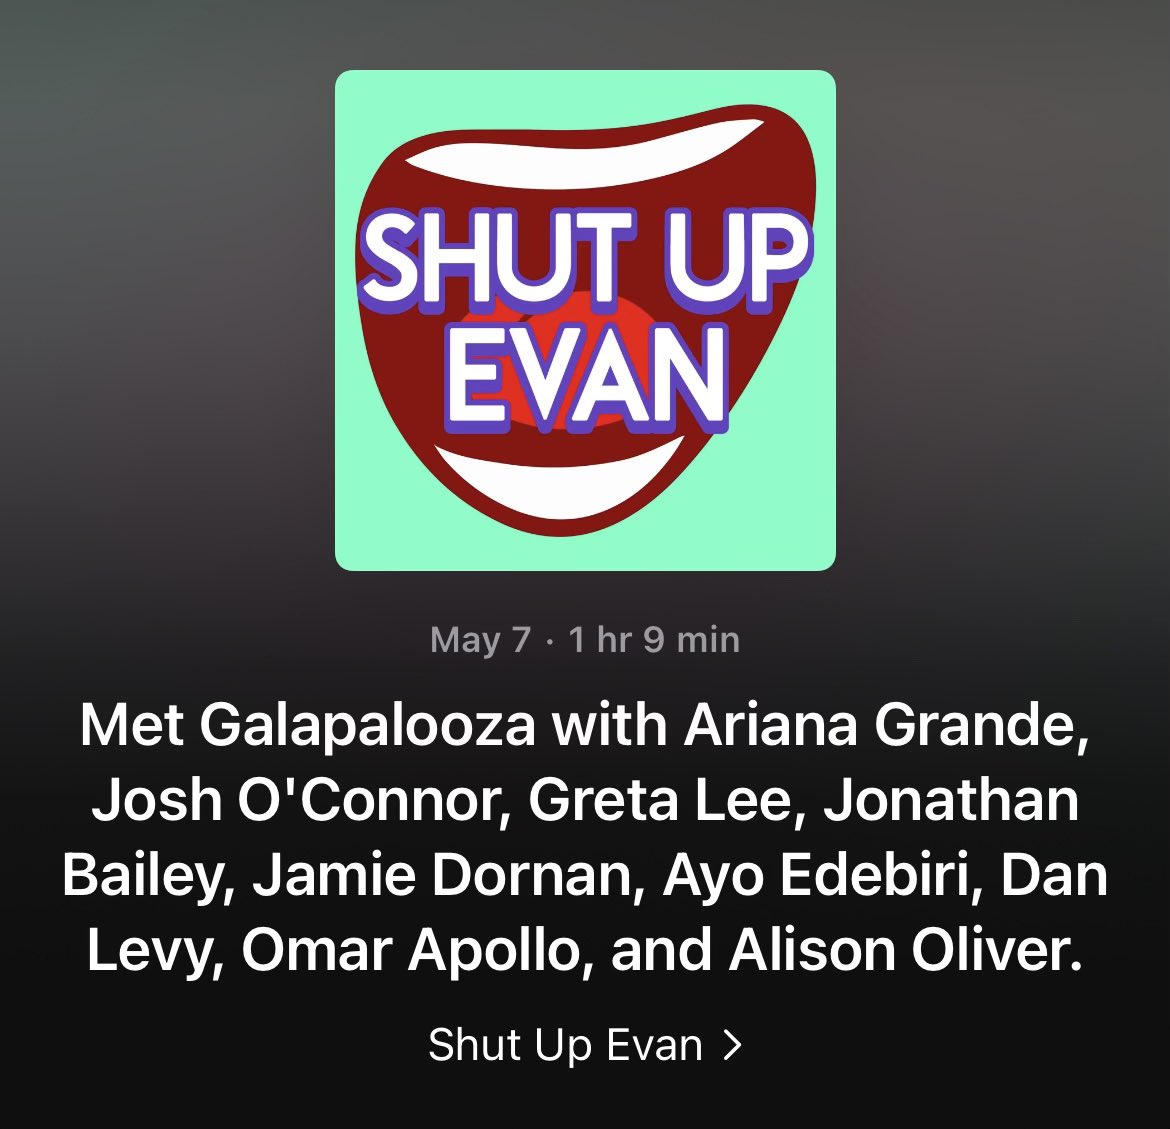 ALL NEW SUPER-SIZED SHUT UP EVAN FEATURING ARIANA GRANDE, JOSH O’CONNOR, GRETA LEE, JAMIE DORNAN, AYO EDEBIRI, DAN LEVY, OMAR APOLLO AND ALISON OLIVER IS NOW LIVE: podcasts.apple.com/us/podcast/shu…